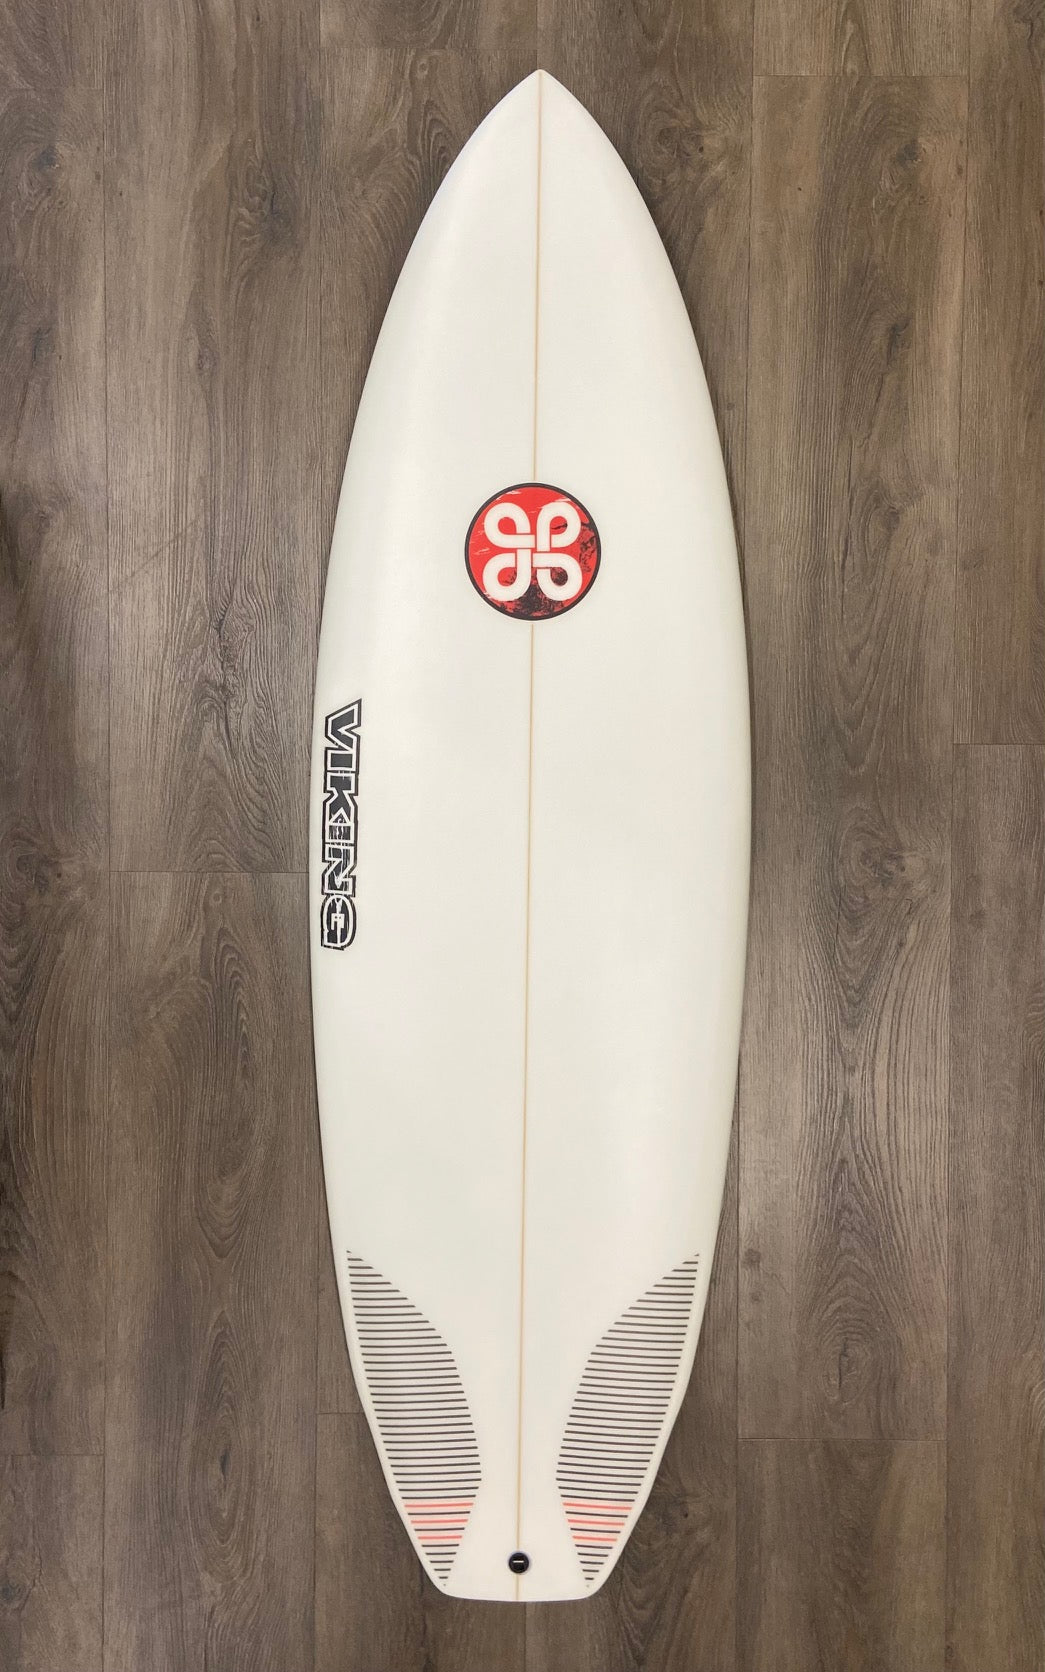 Viking Surfboards Double Bump Squash Epoxy Surfboard - Surfboard